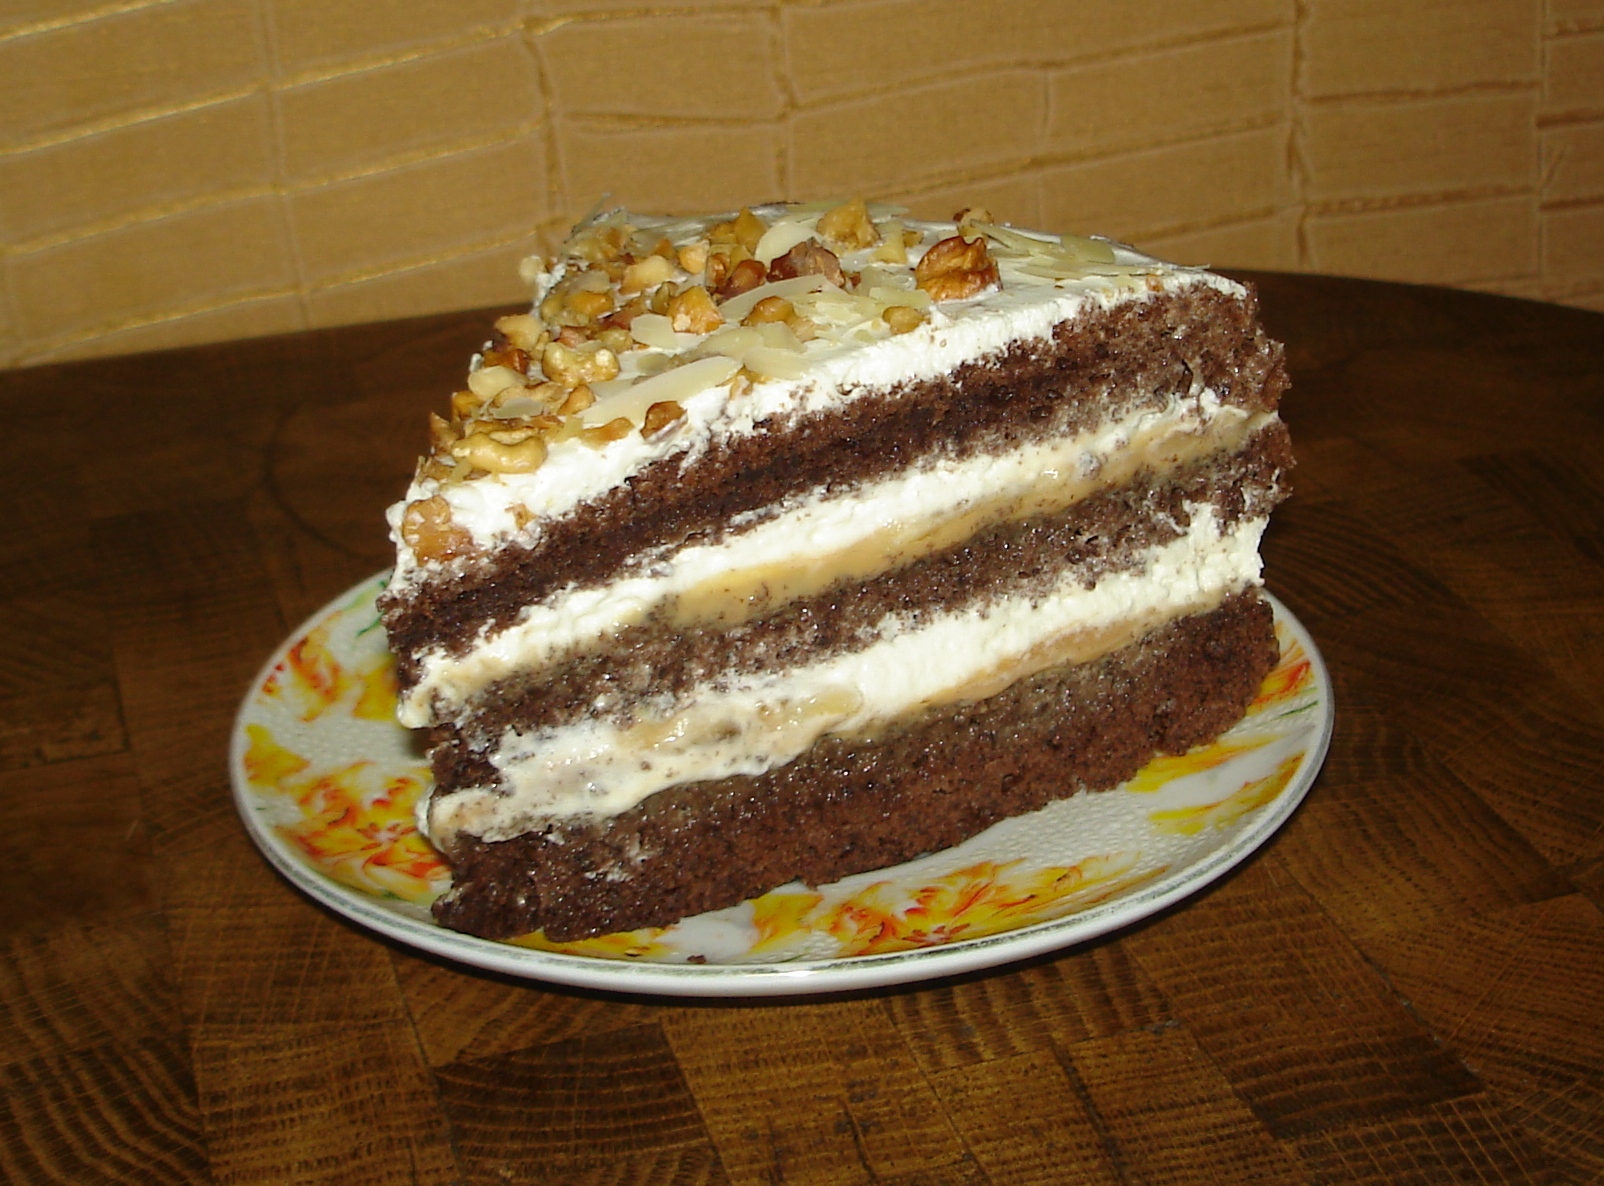 Chocolate-banana cake (based on Seleznev's dessert)